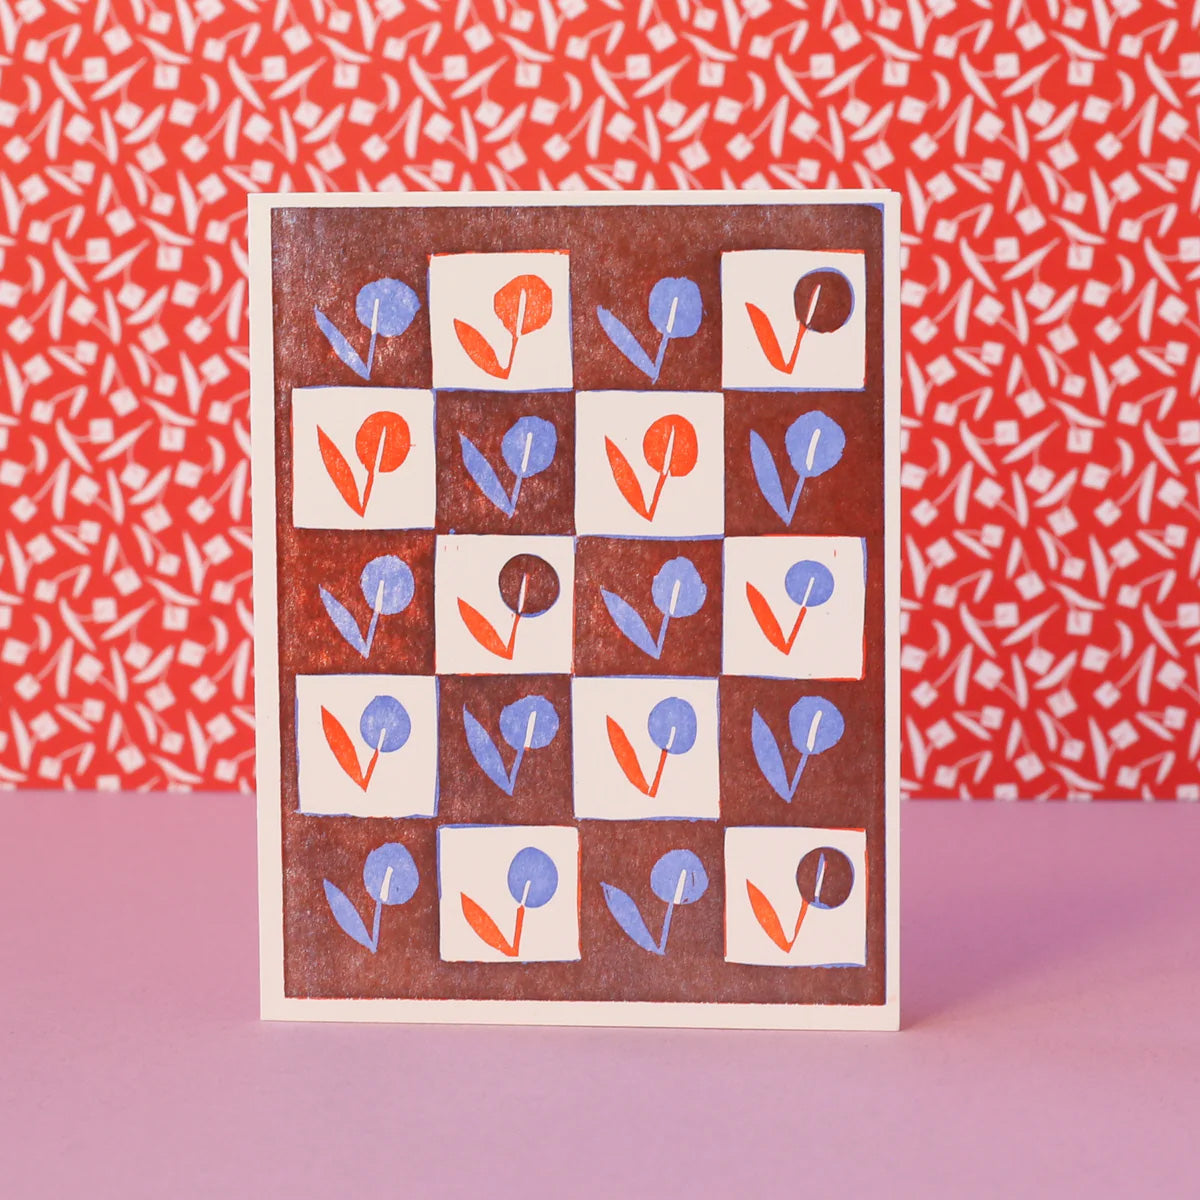 Letterpress Card Boxed Set - Geoflorals